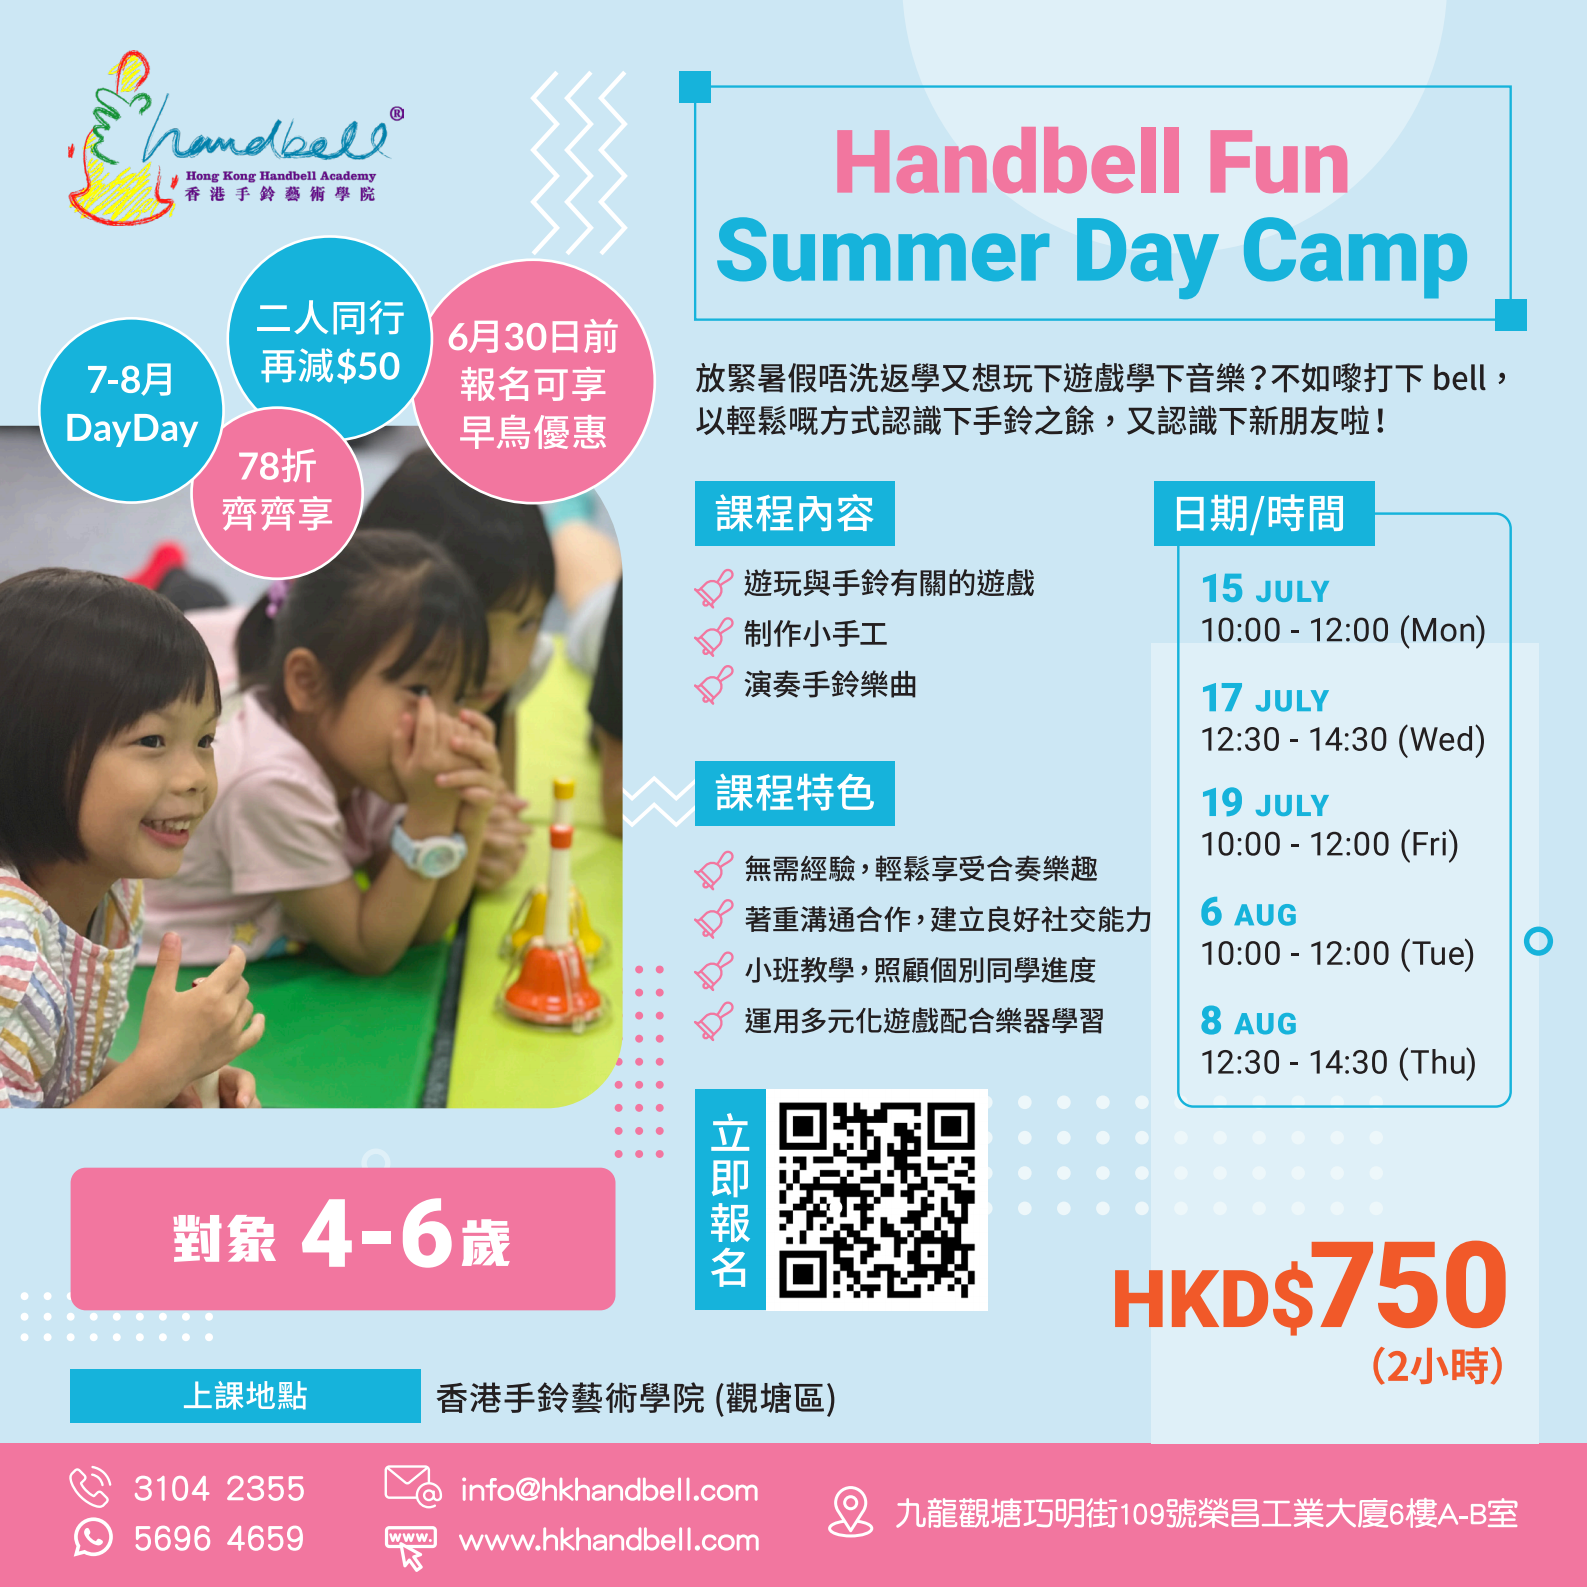 Handbell Fun Summer Day Camp